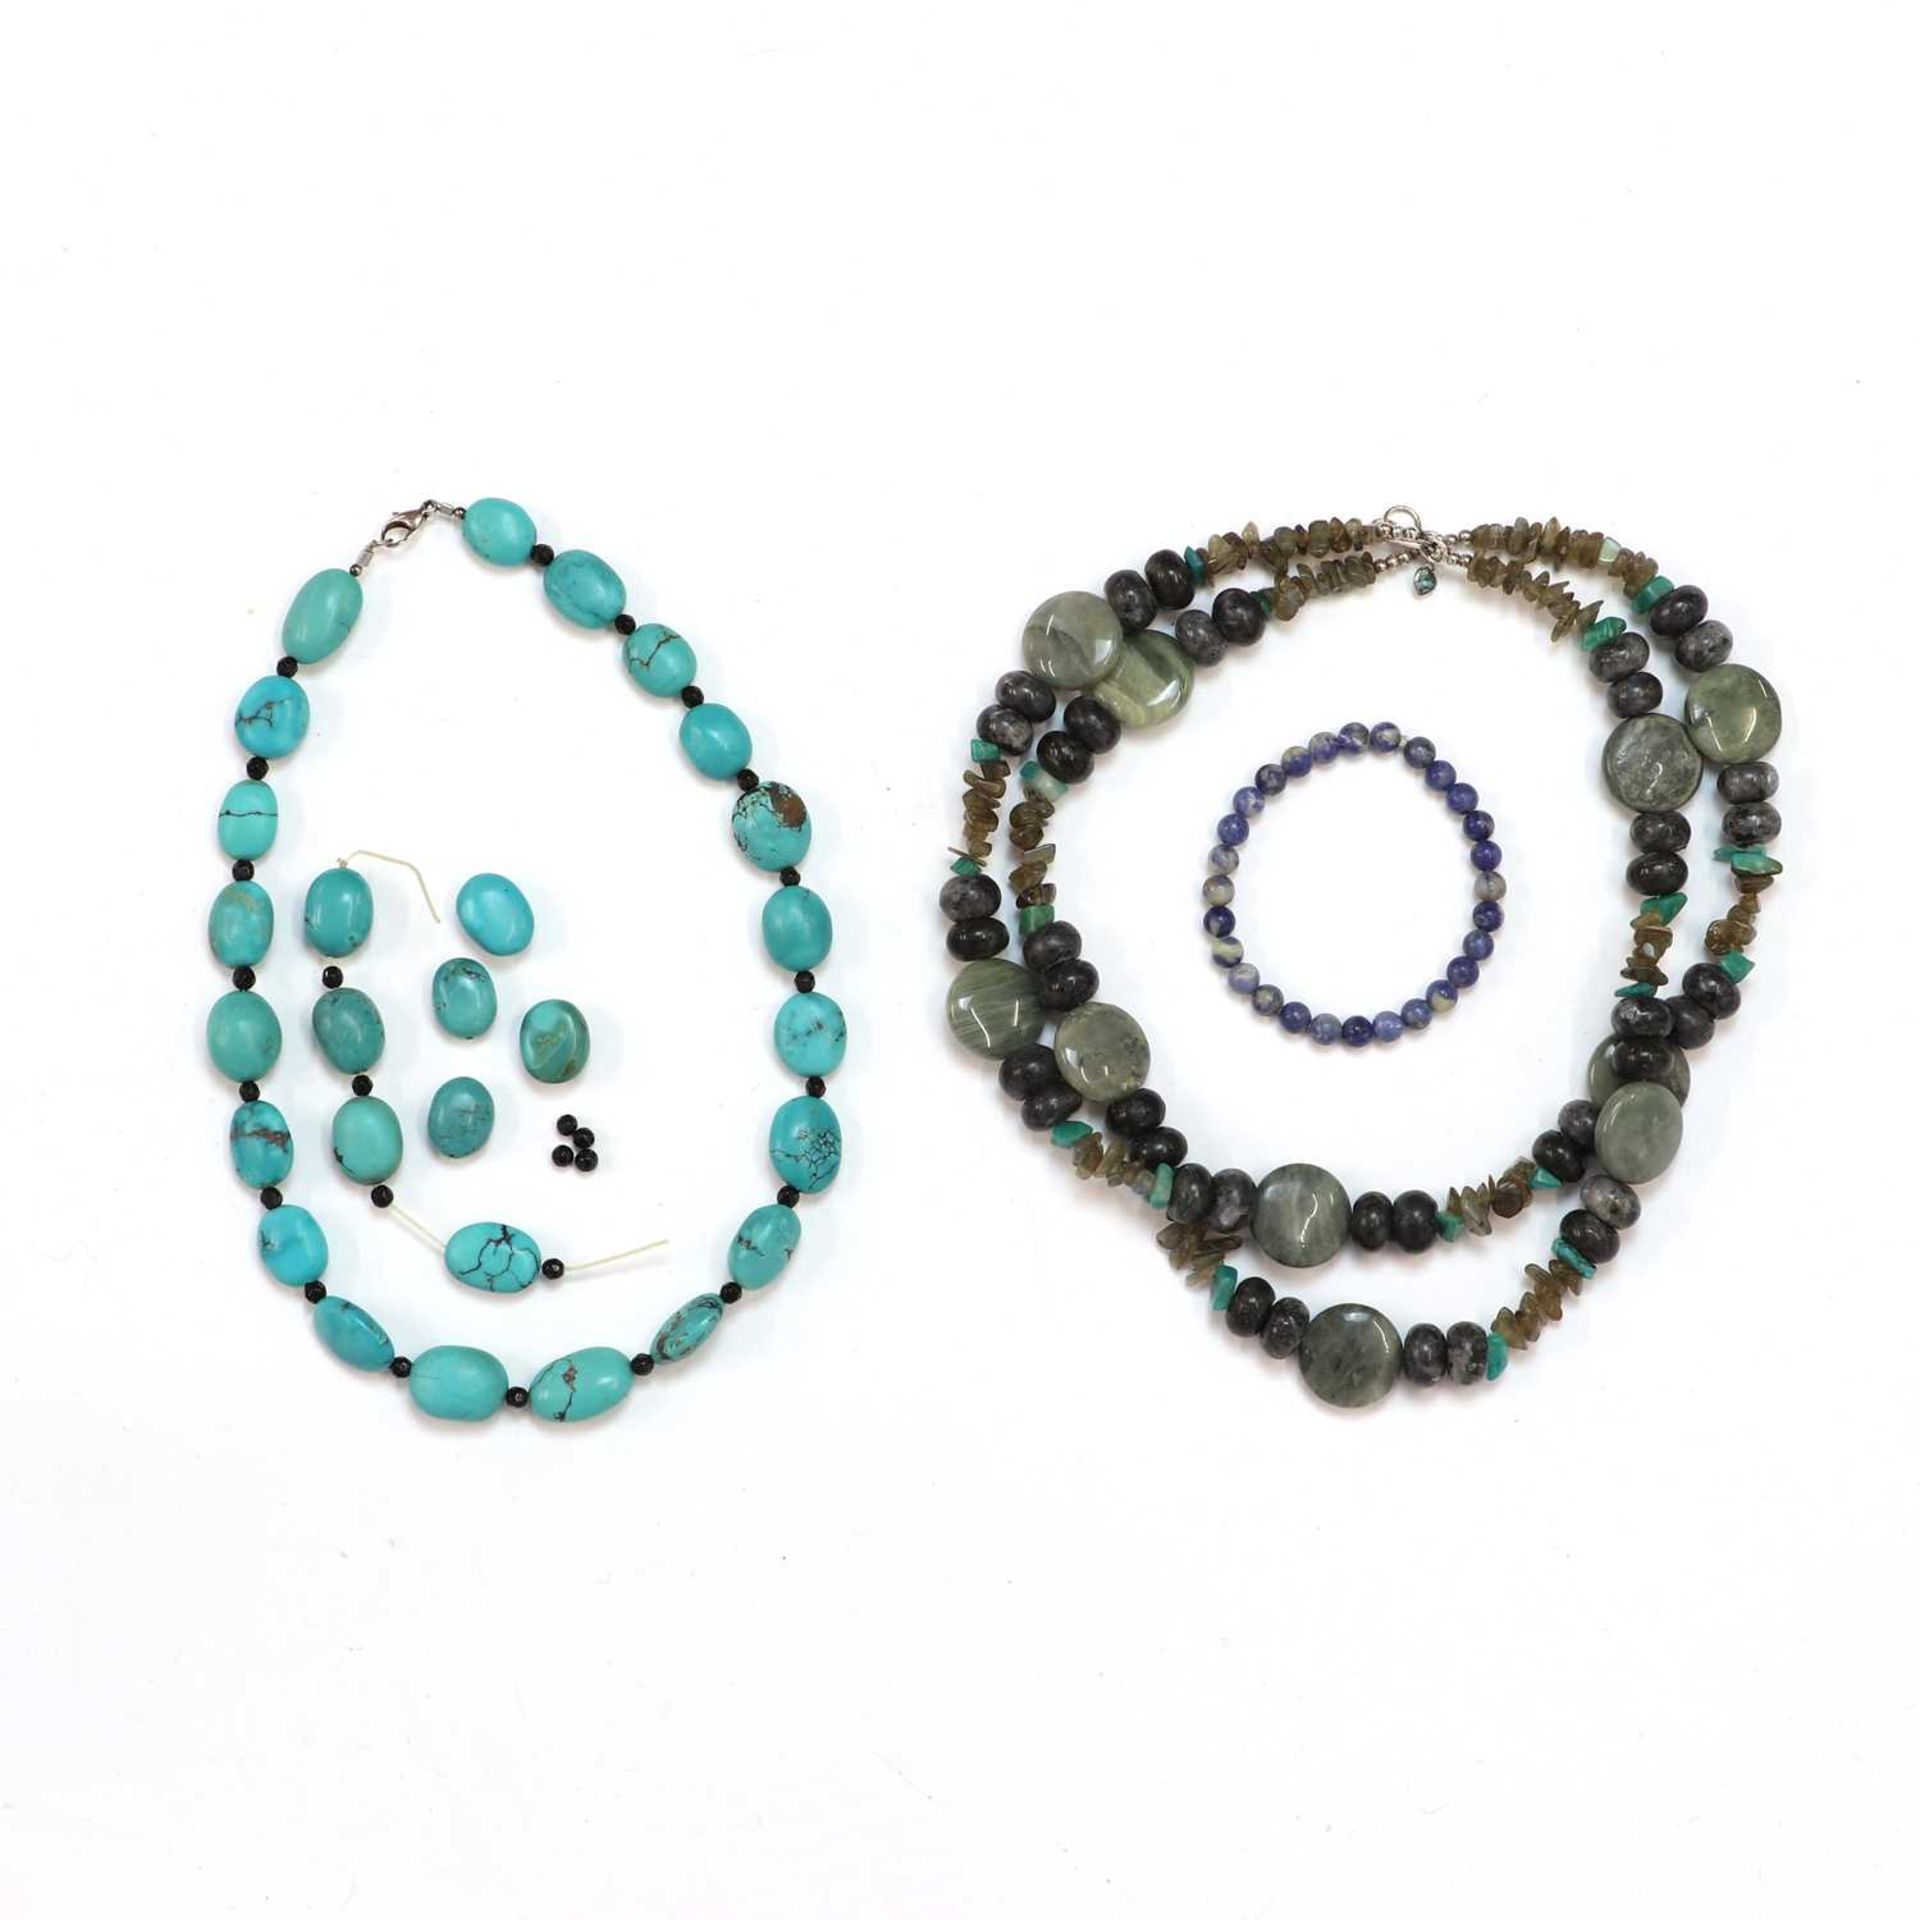 Two hardstone bead necklaces,